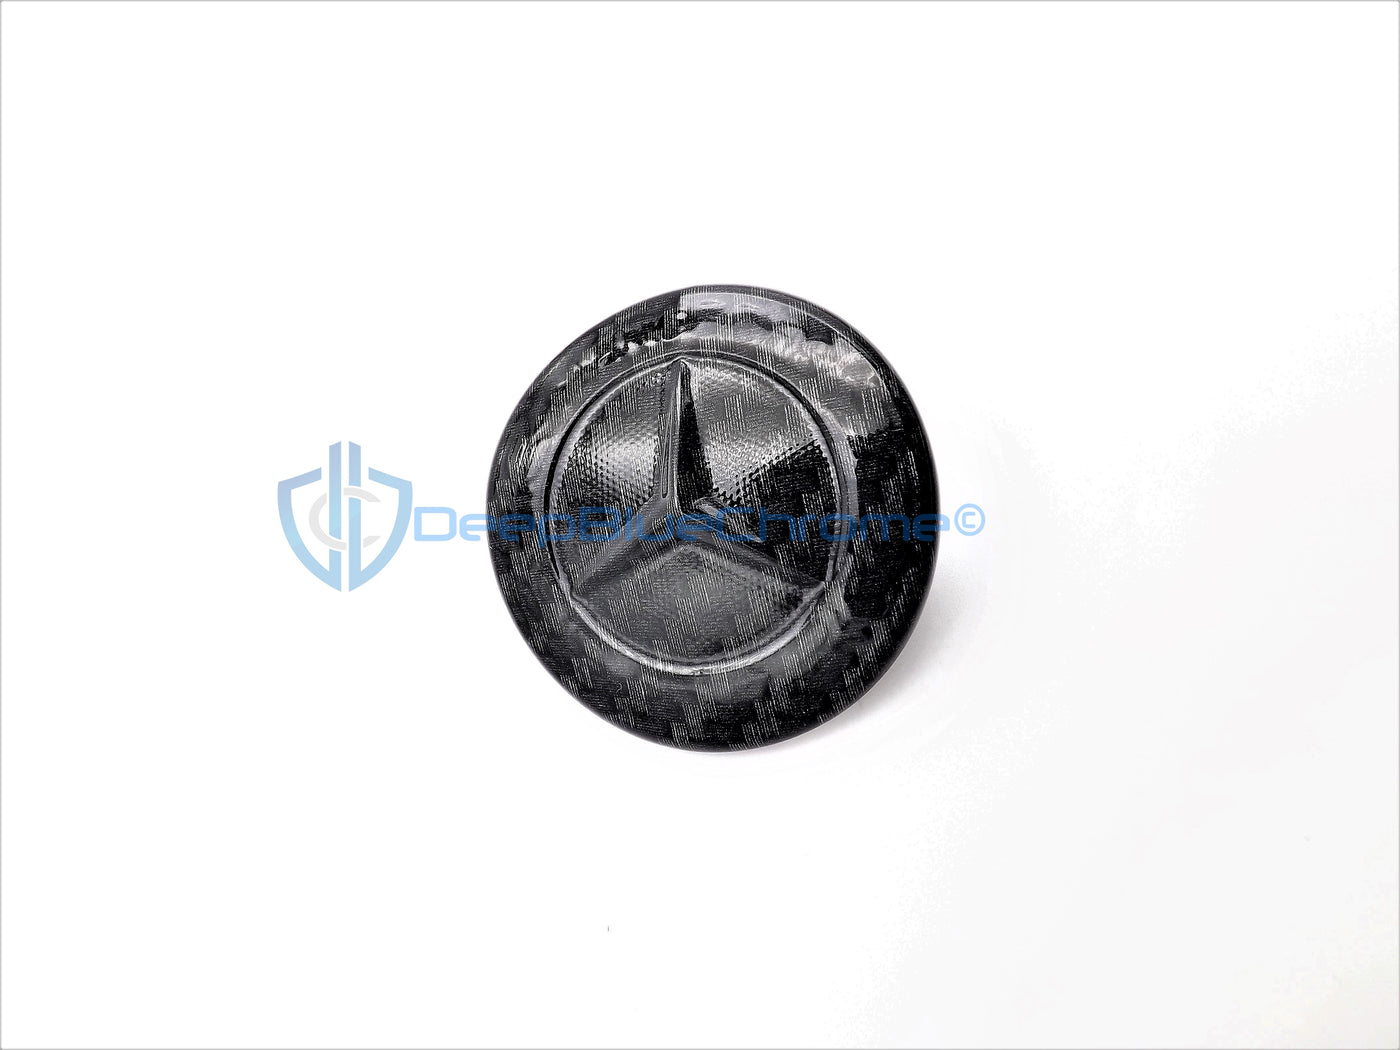 MB C-Class Carbon Fiber Front Grille Shell Emblem OEM Star Logo Badge W204 C63 AMG